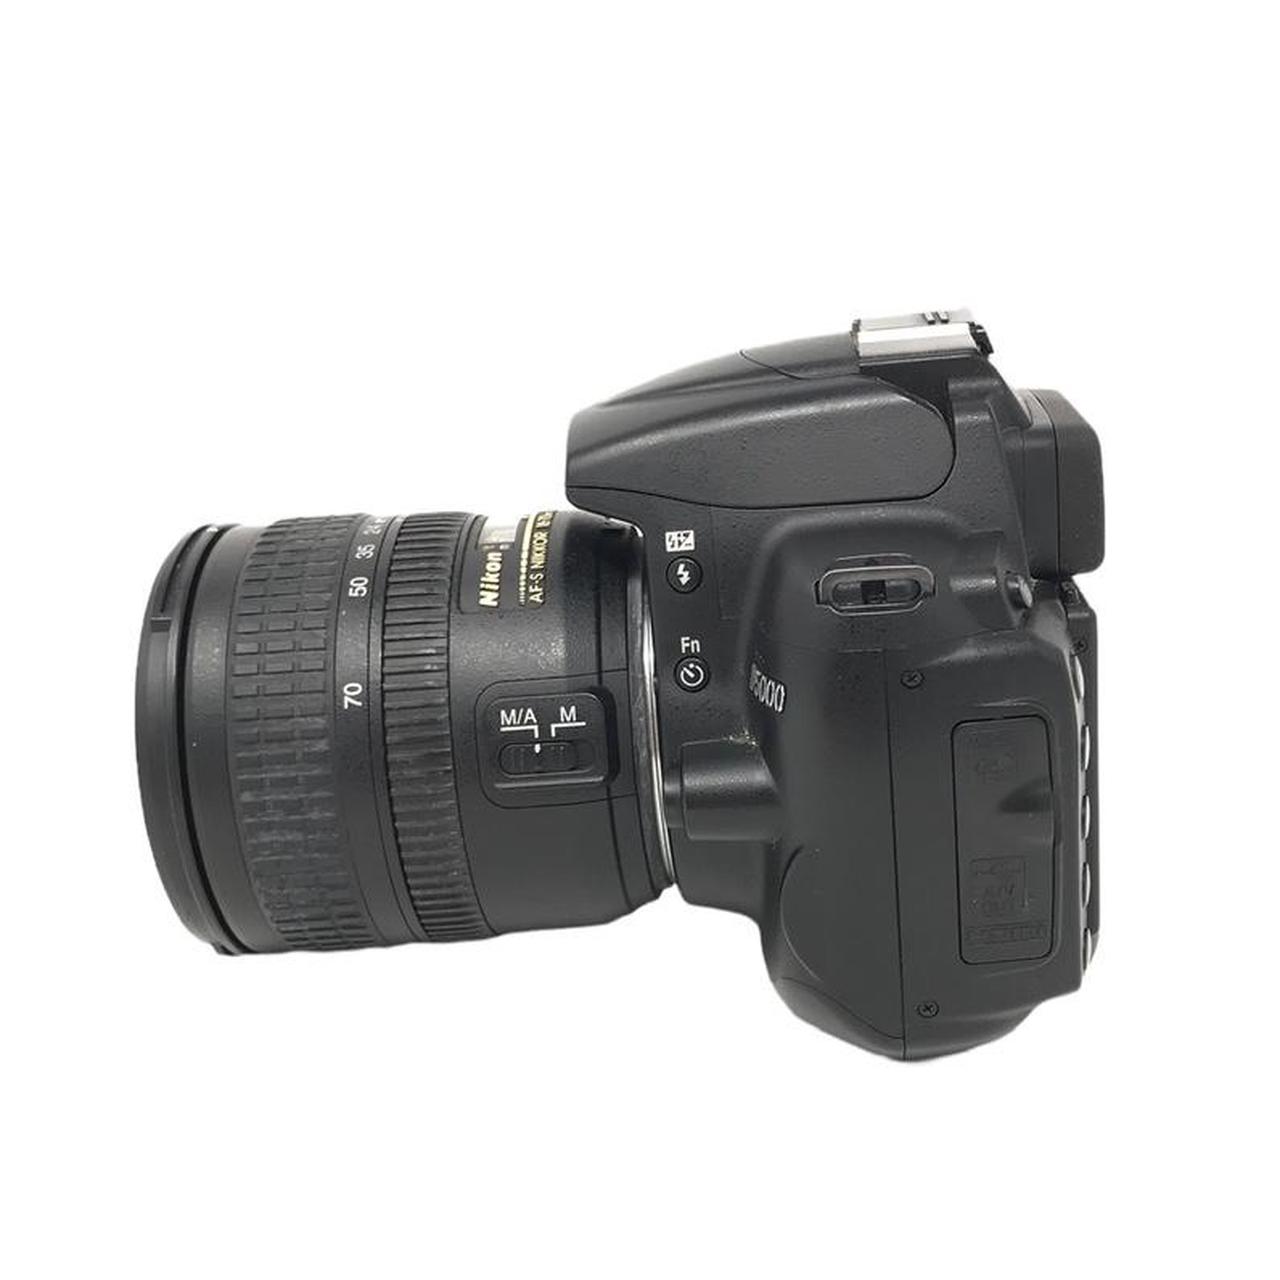 Product Image 2 - Nikon D5000 Digital Camera DSLR

Comes